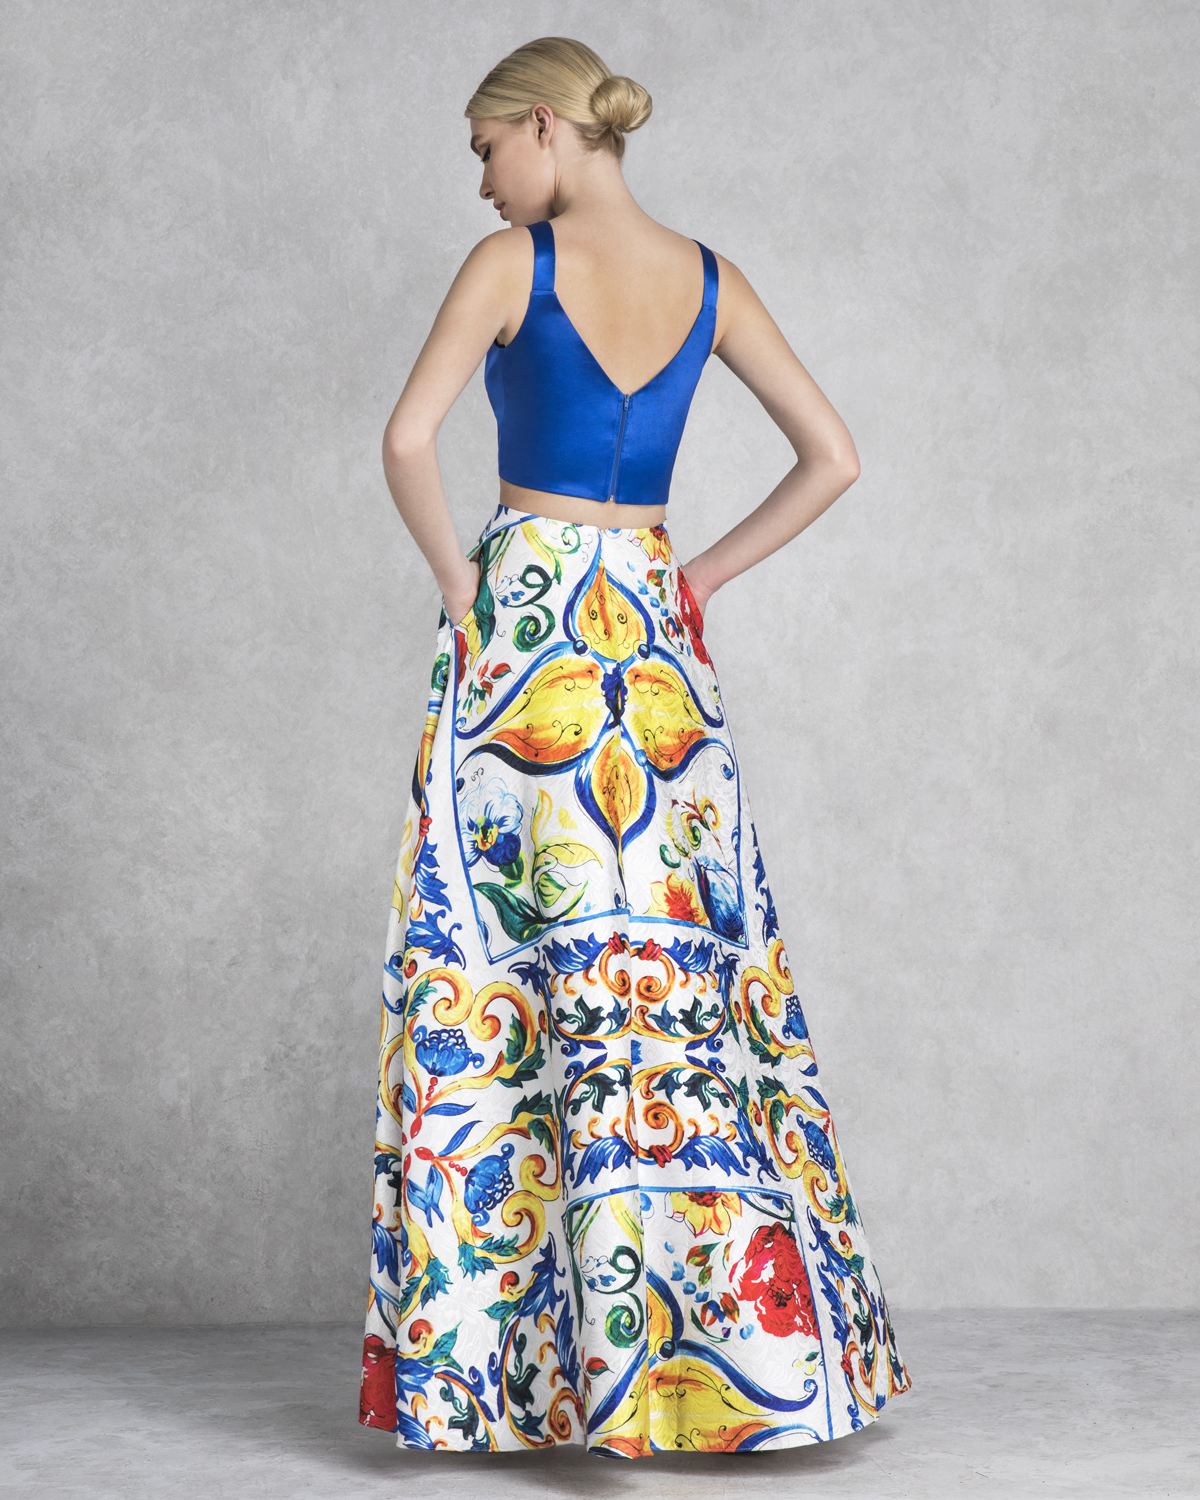 Коктейльные платья / Crop top with printed skirt and solid color top